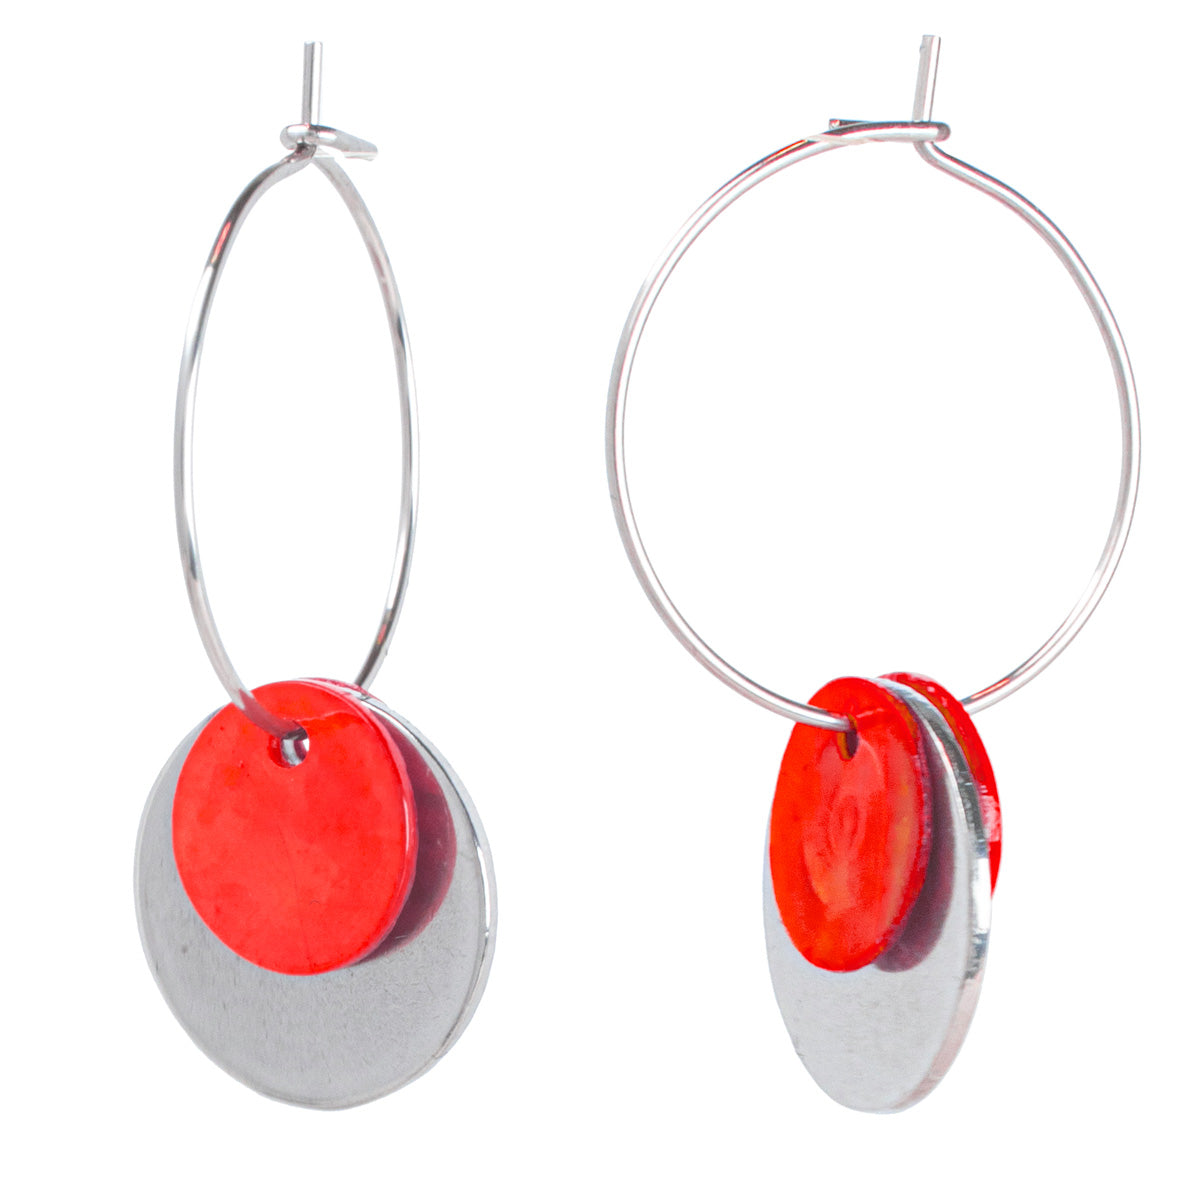 Ring earring shell pendant (steel 316L)